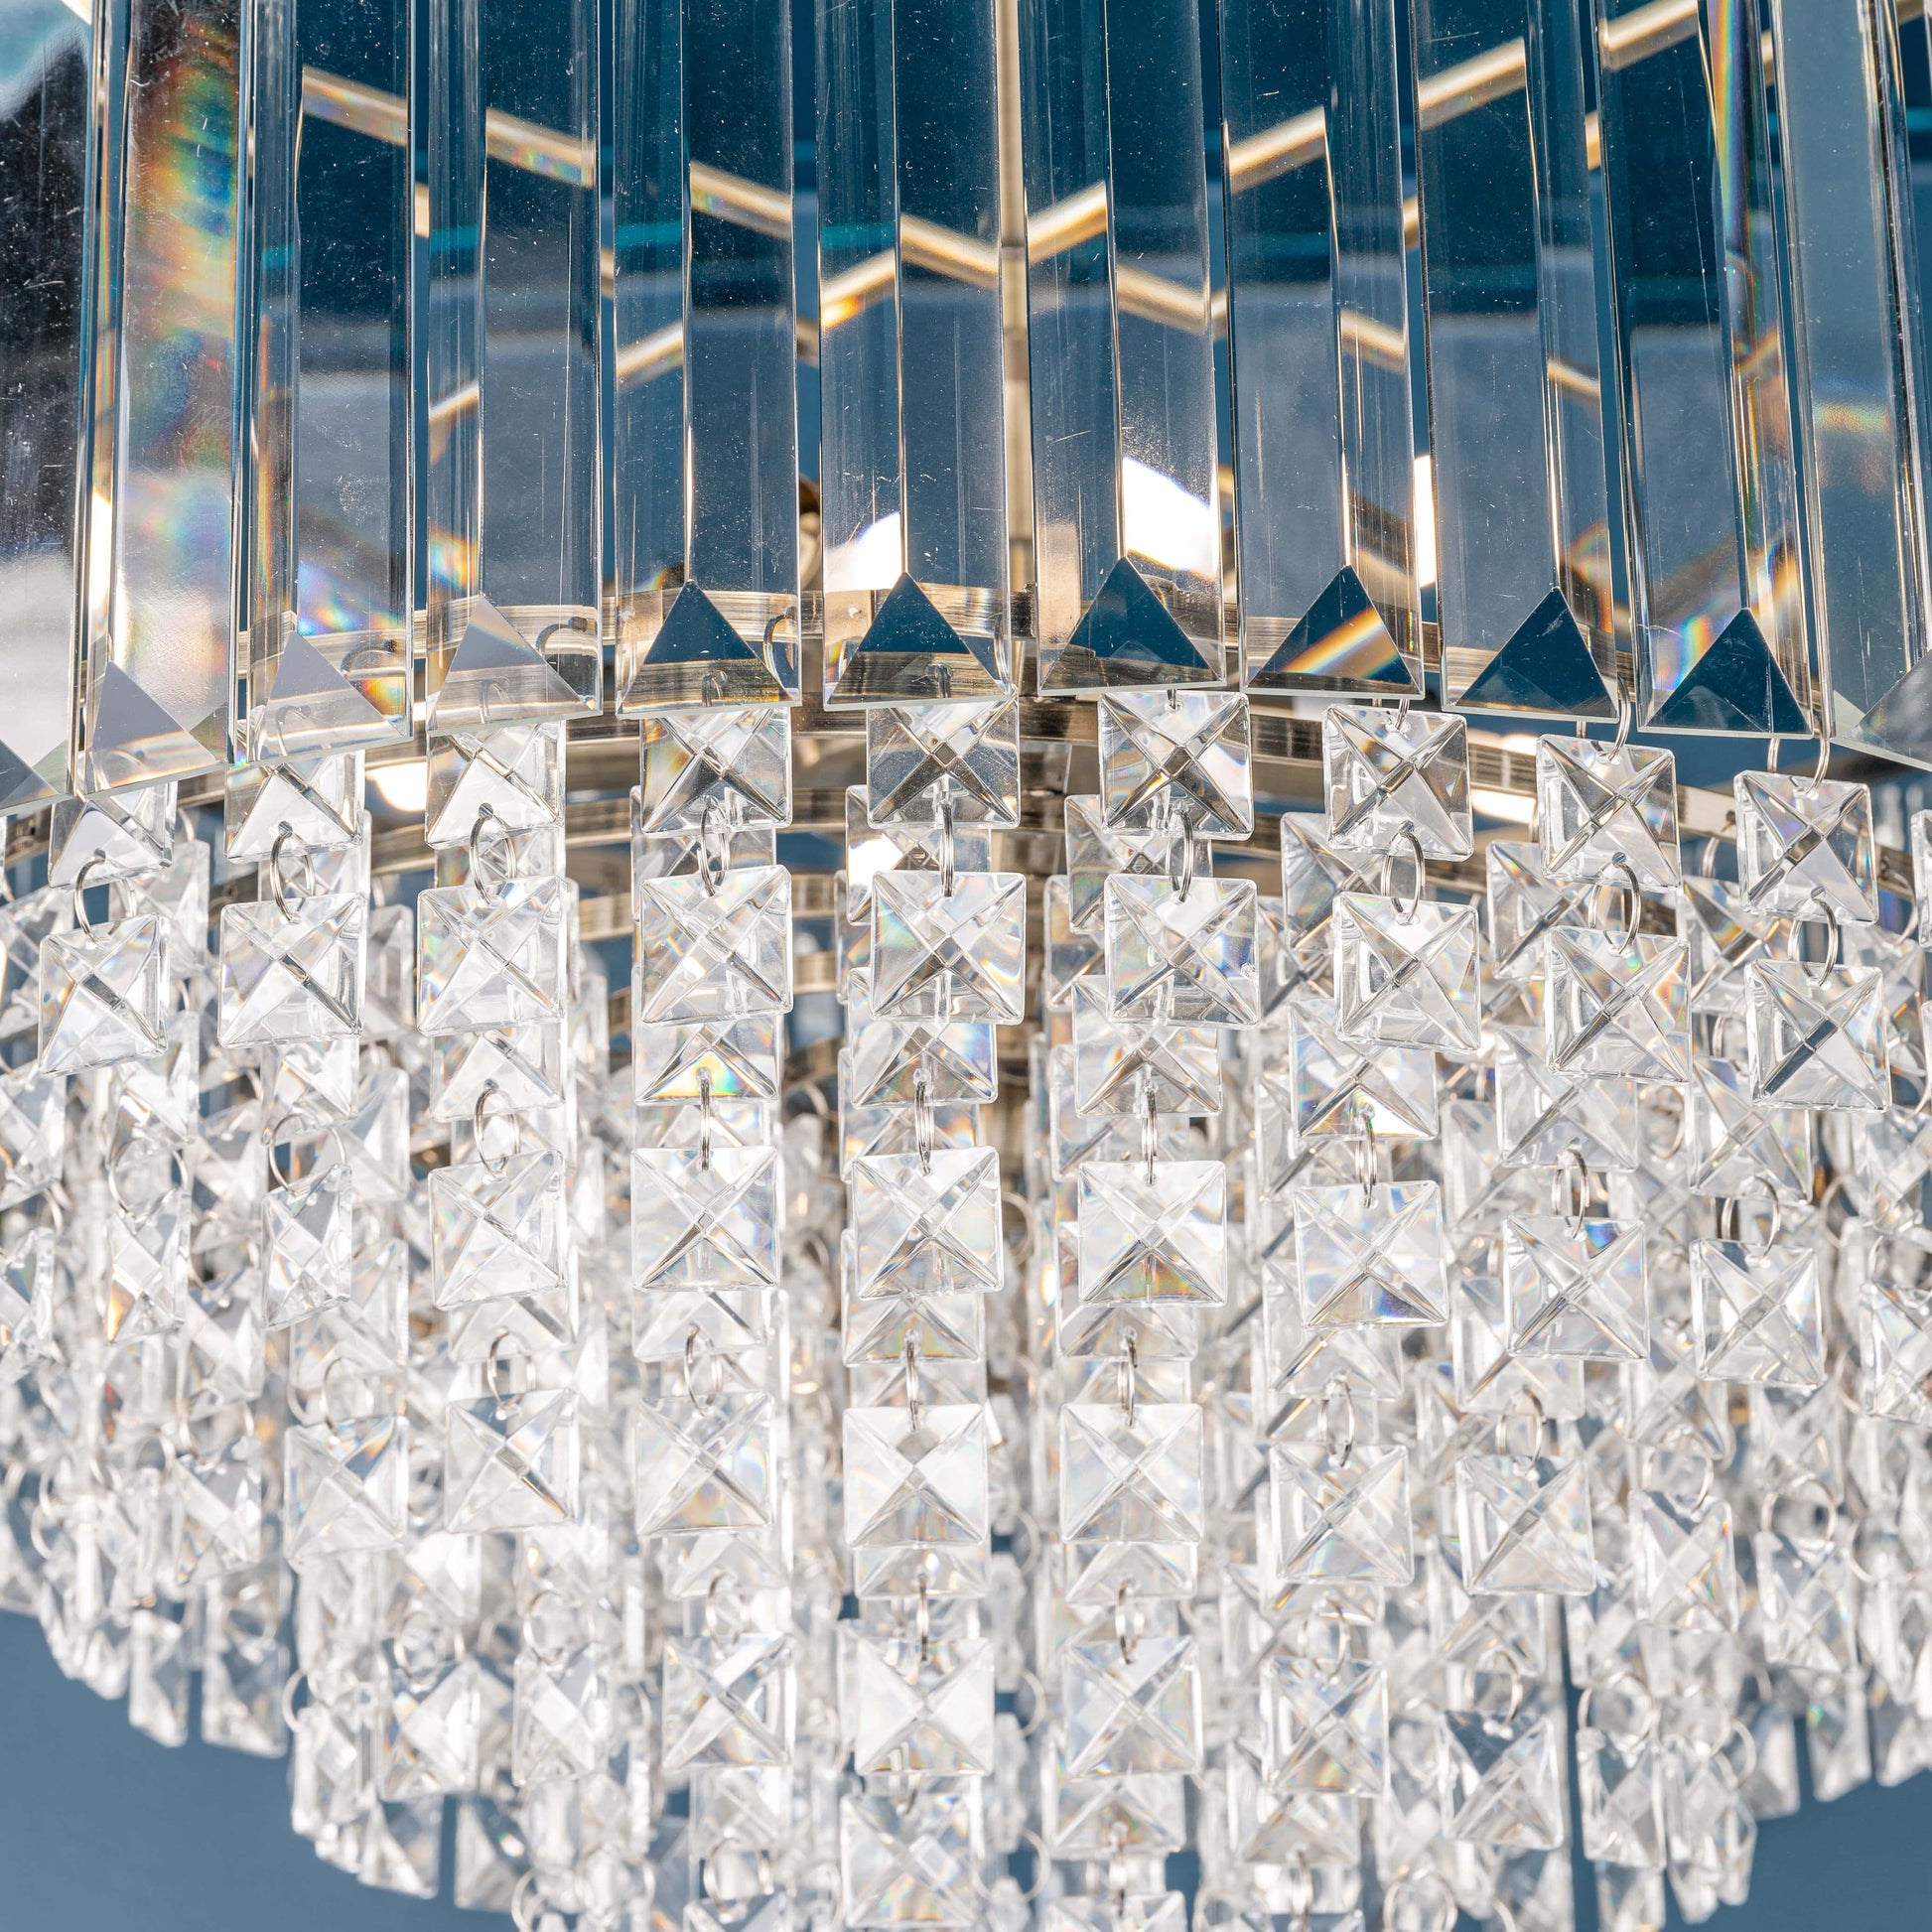 Lights  -  Laura Ashley Vienna Antique Brass Crystal 5 Light Chandelier Ceiling Light  -  60001064